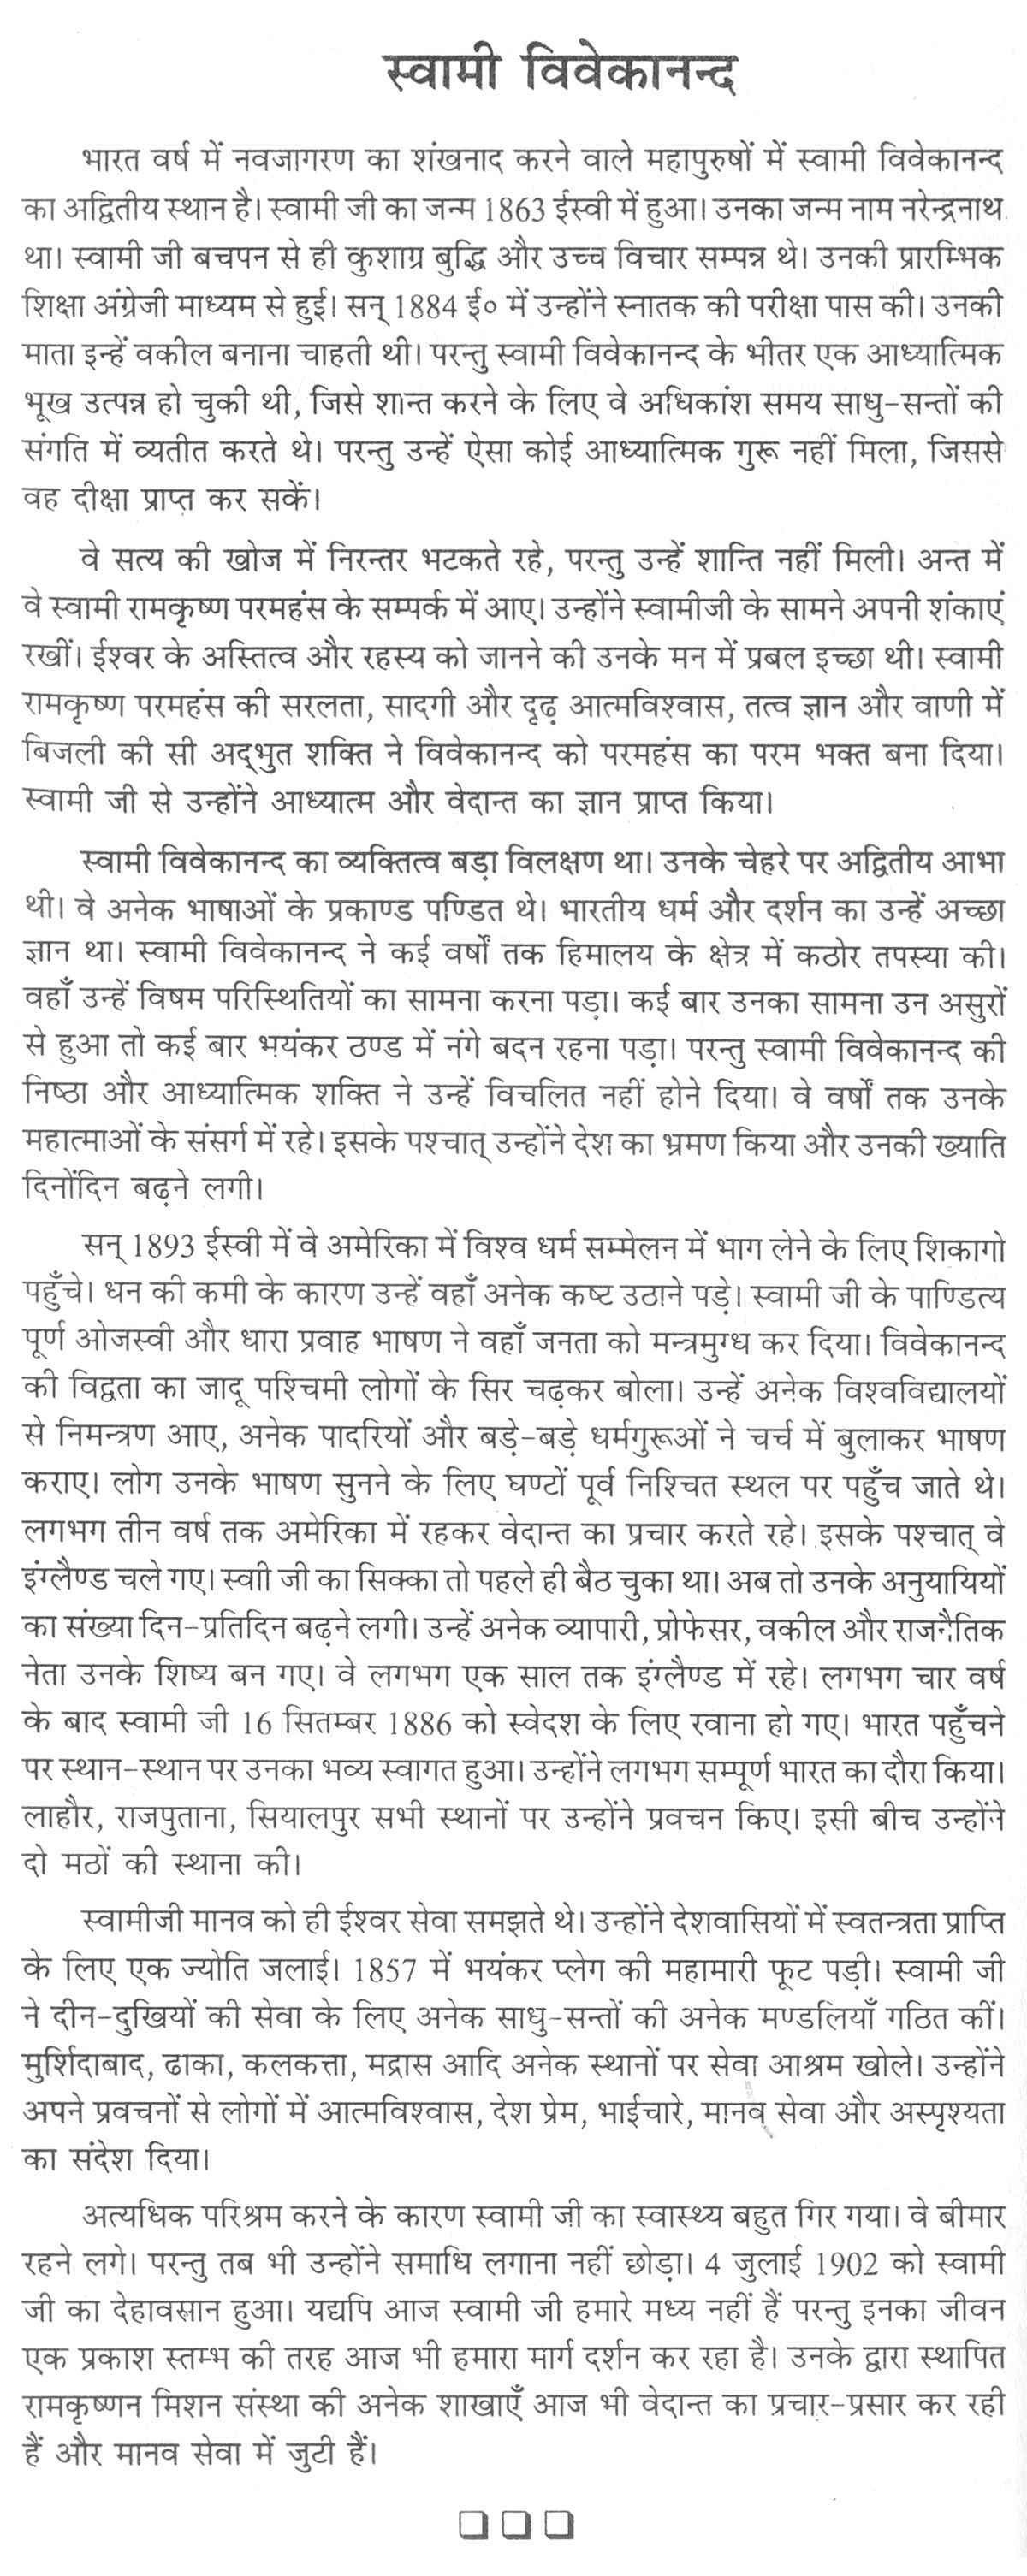 Very short essay on swami vivekanand